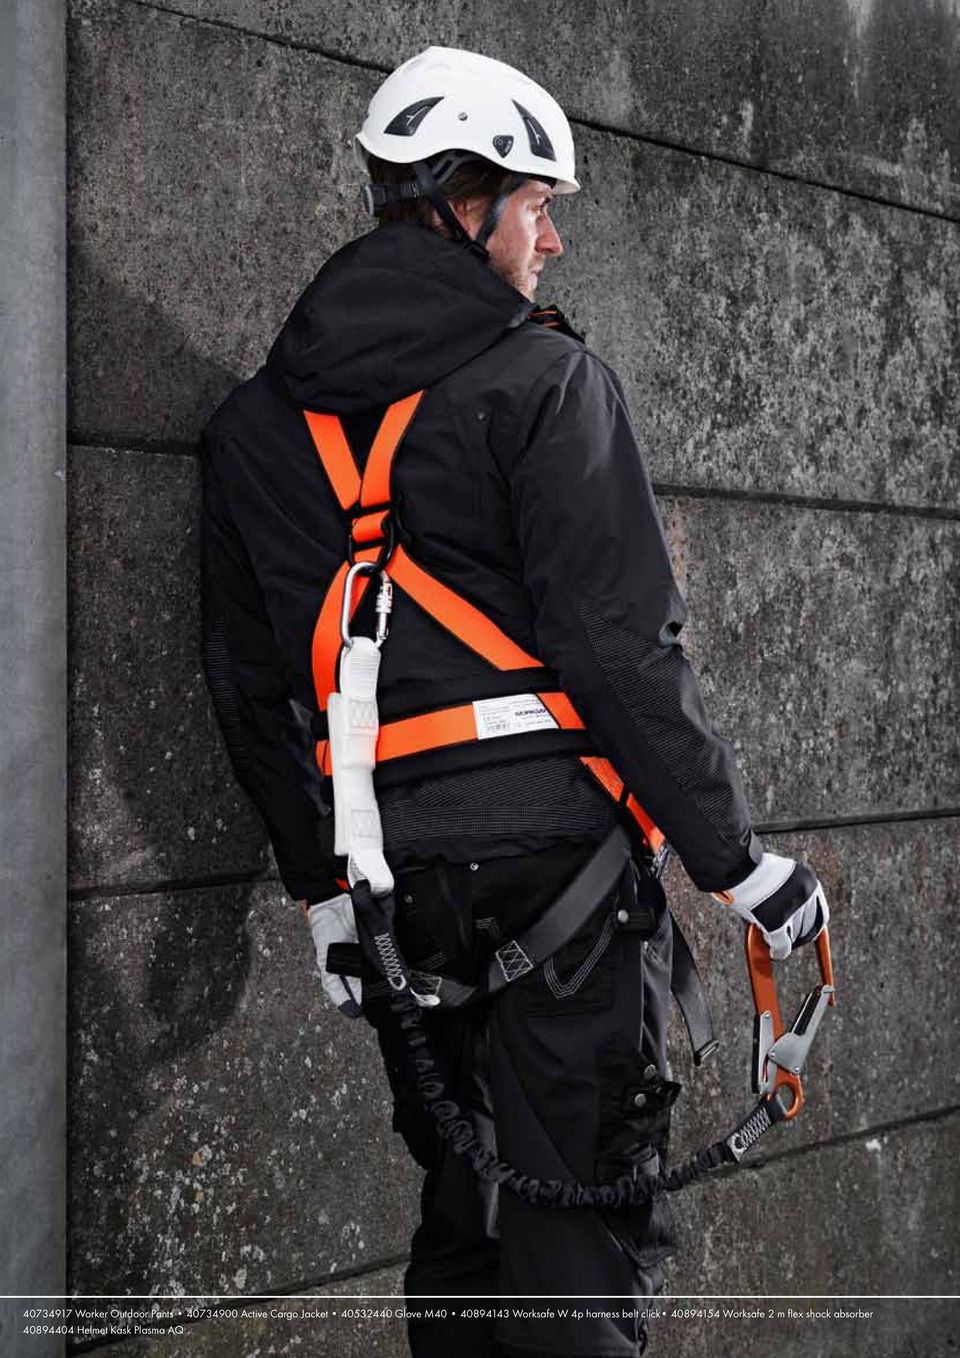 Worksafe W 4p harness belt click 40894154